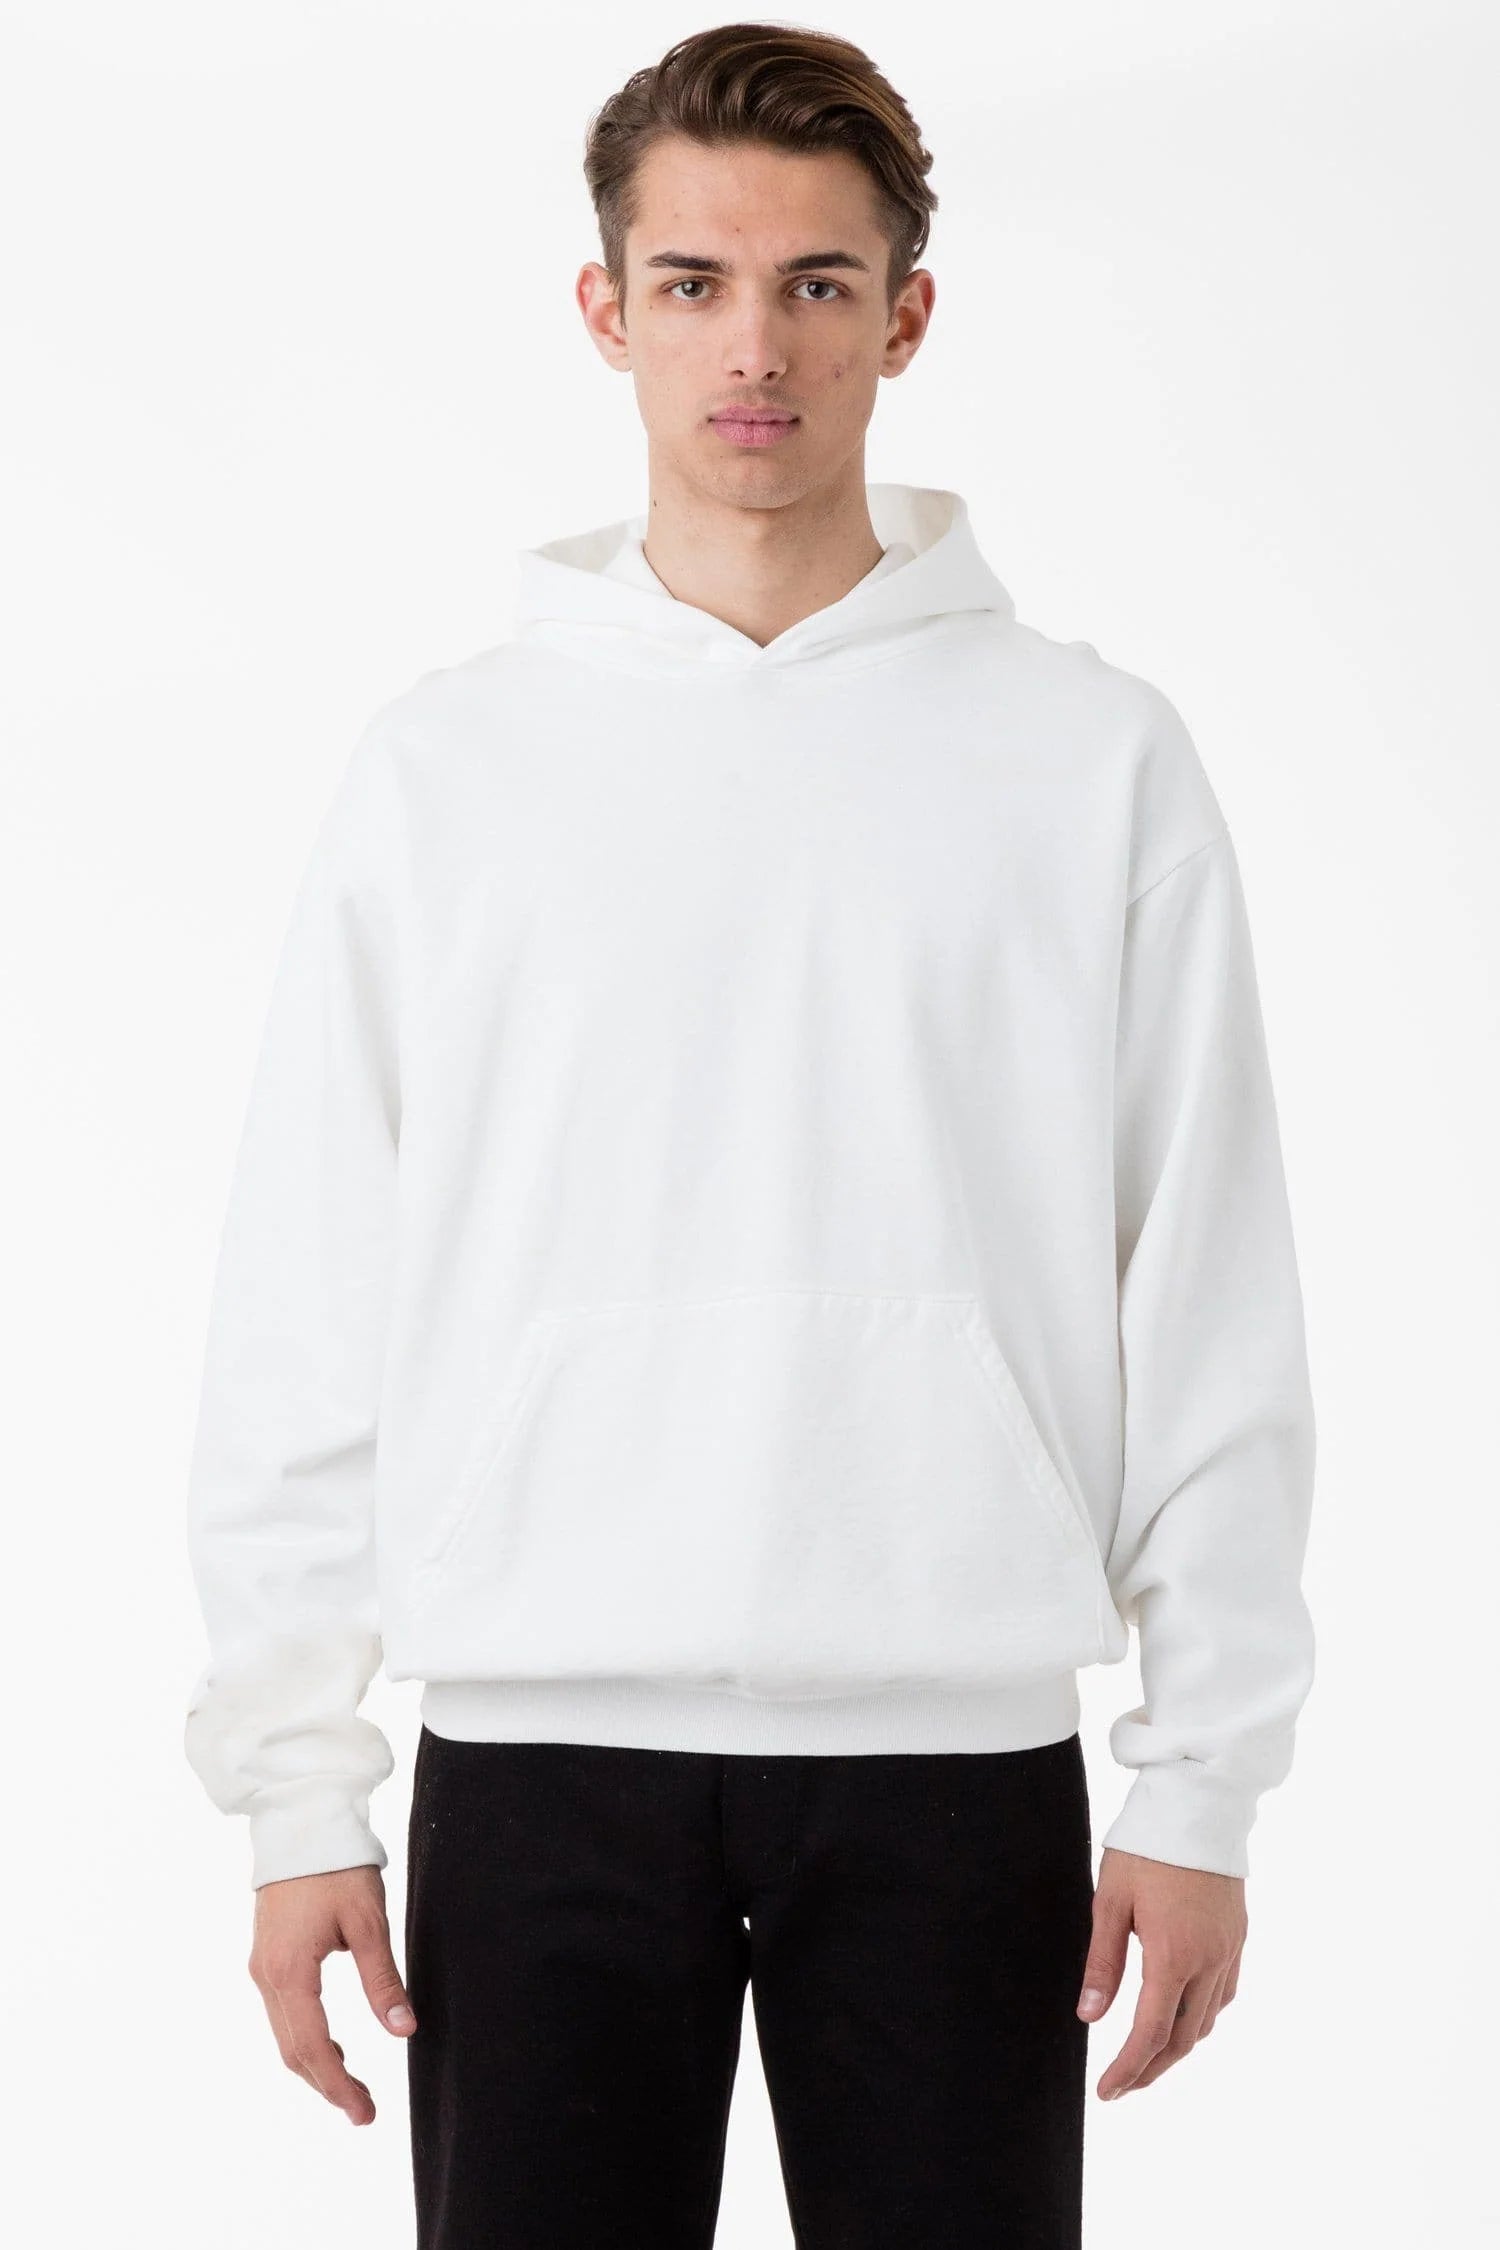 Los Angeles Apparel HF09 Hooded Sweatshirt - Design Cuts